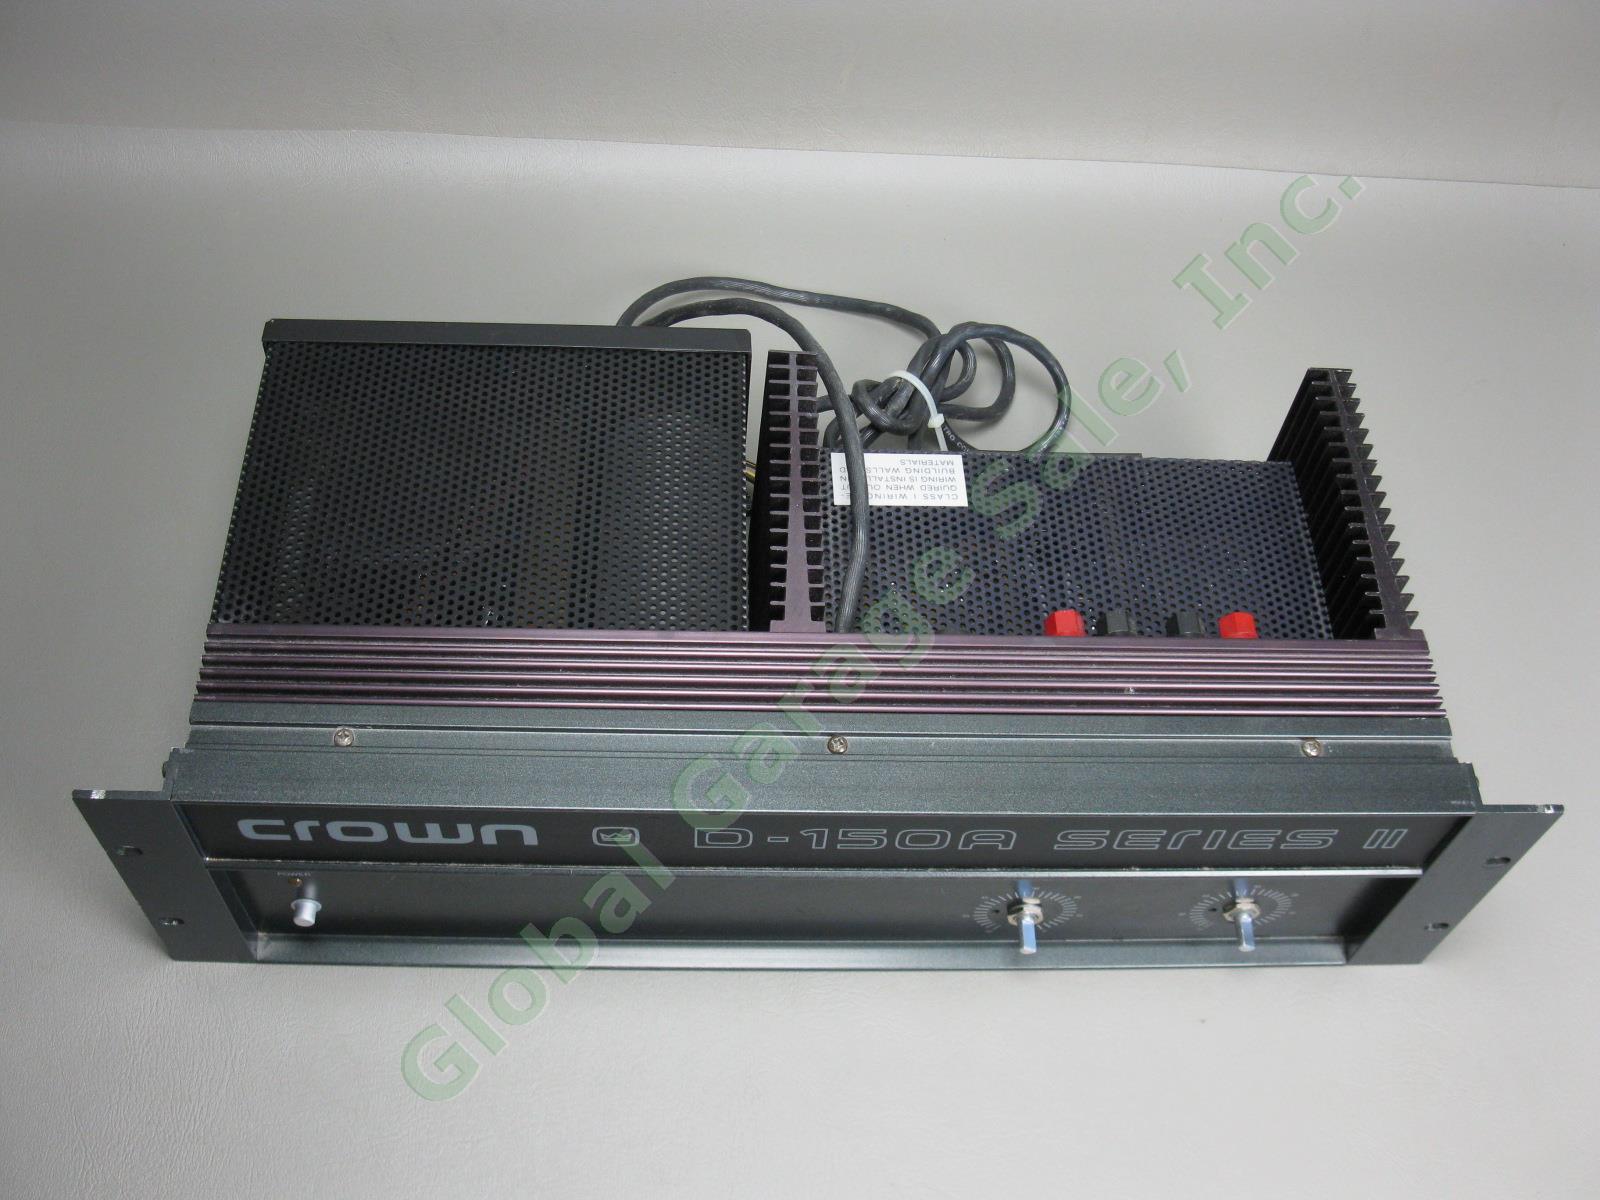 Crown D-150A Series II Professional Studio Power Amp Amplifier Rack Mount NO RES 3